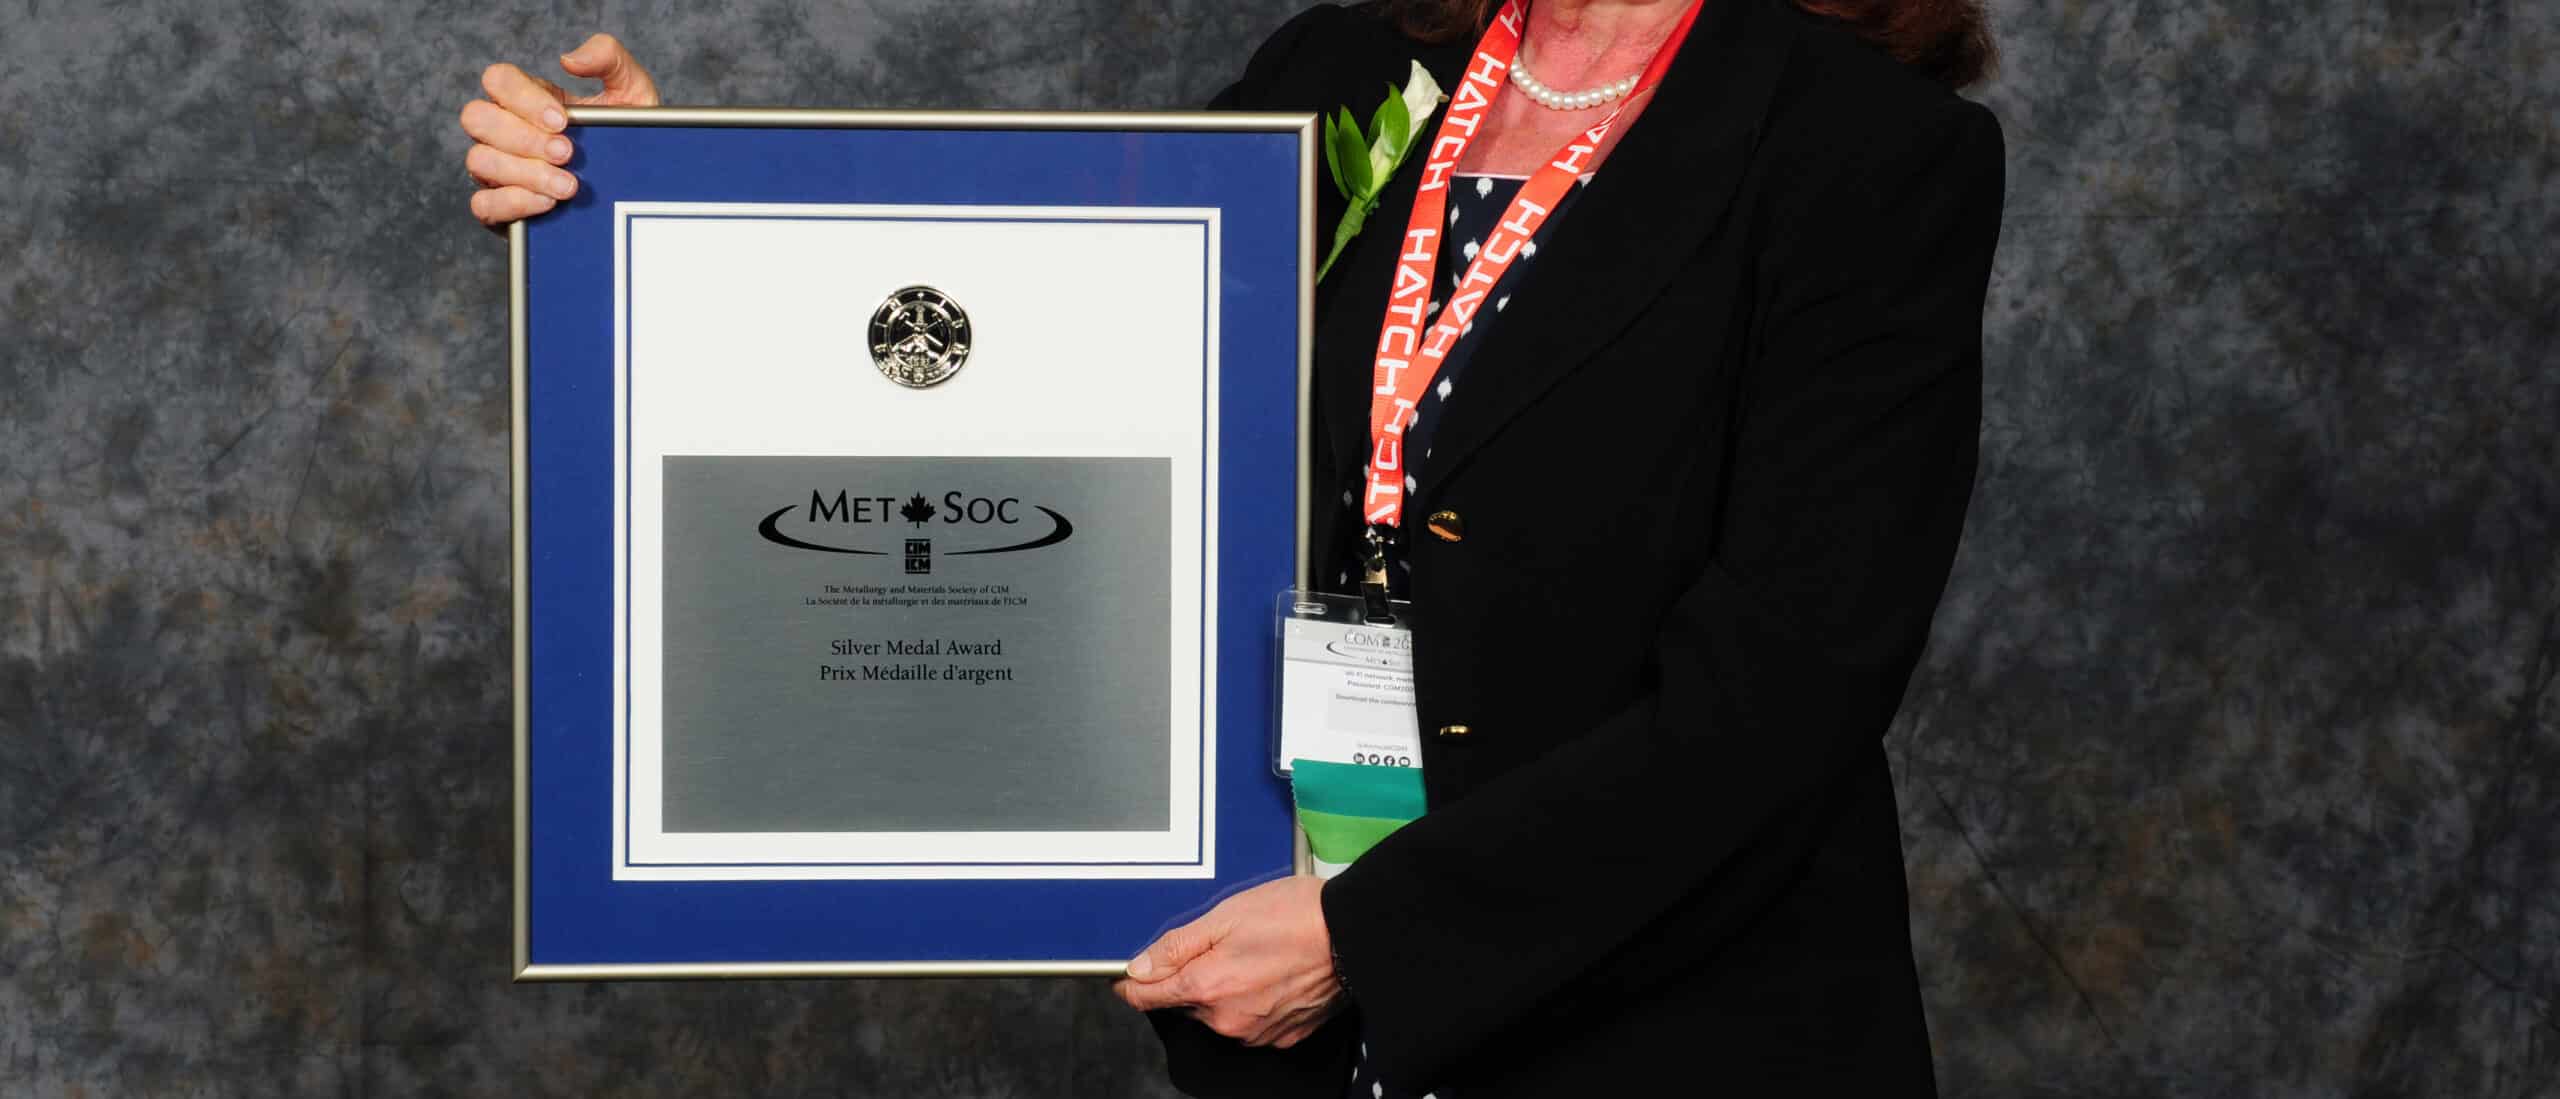 MetSoc Silver Medal Award